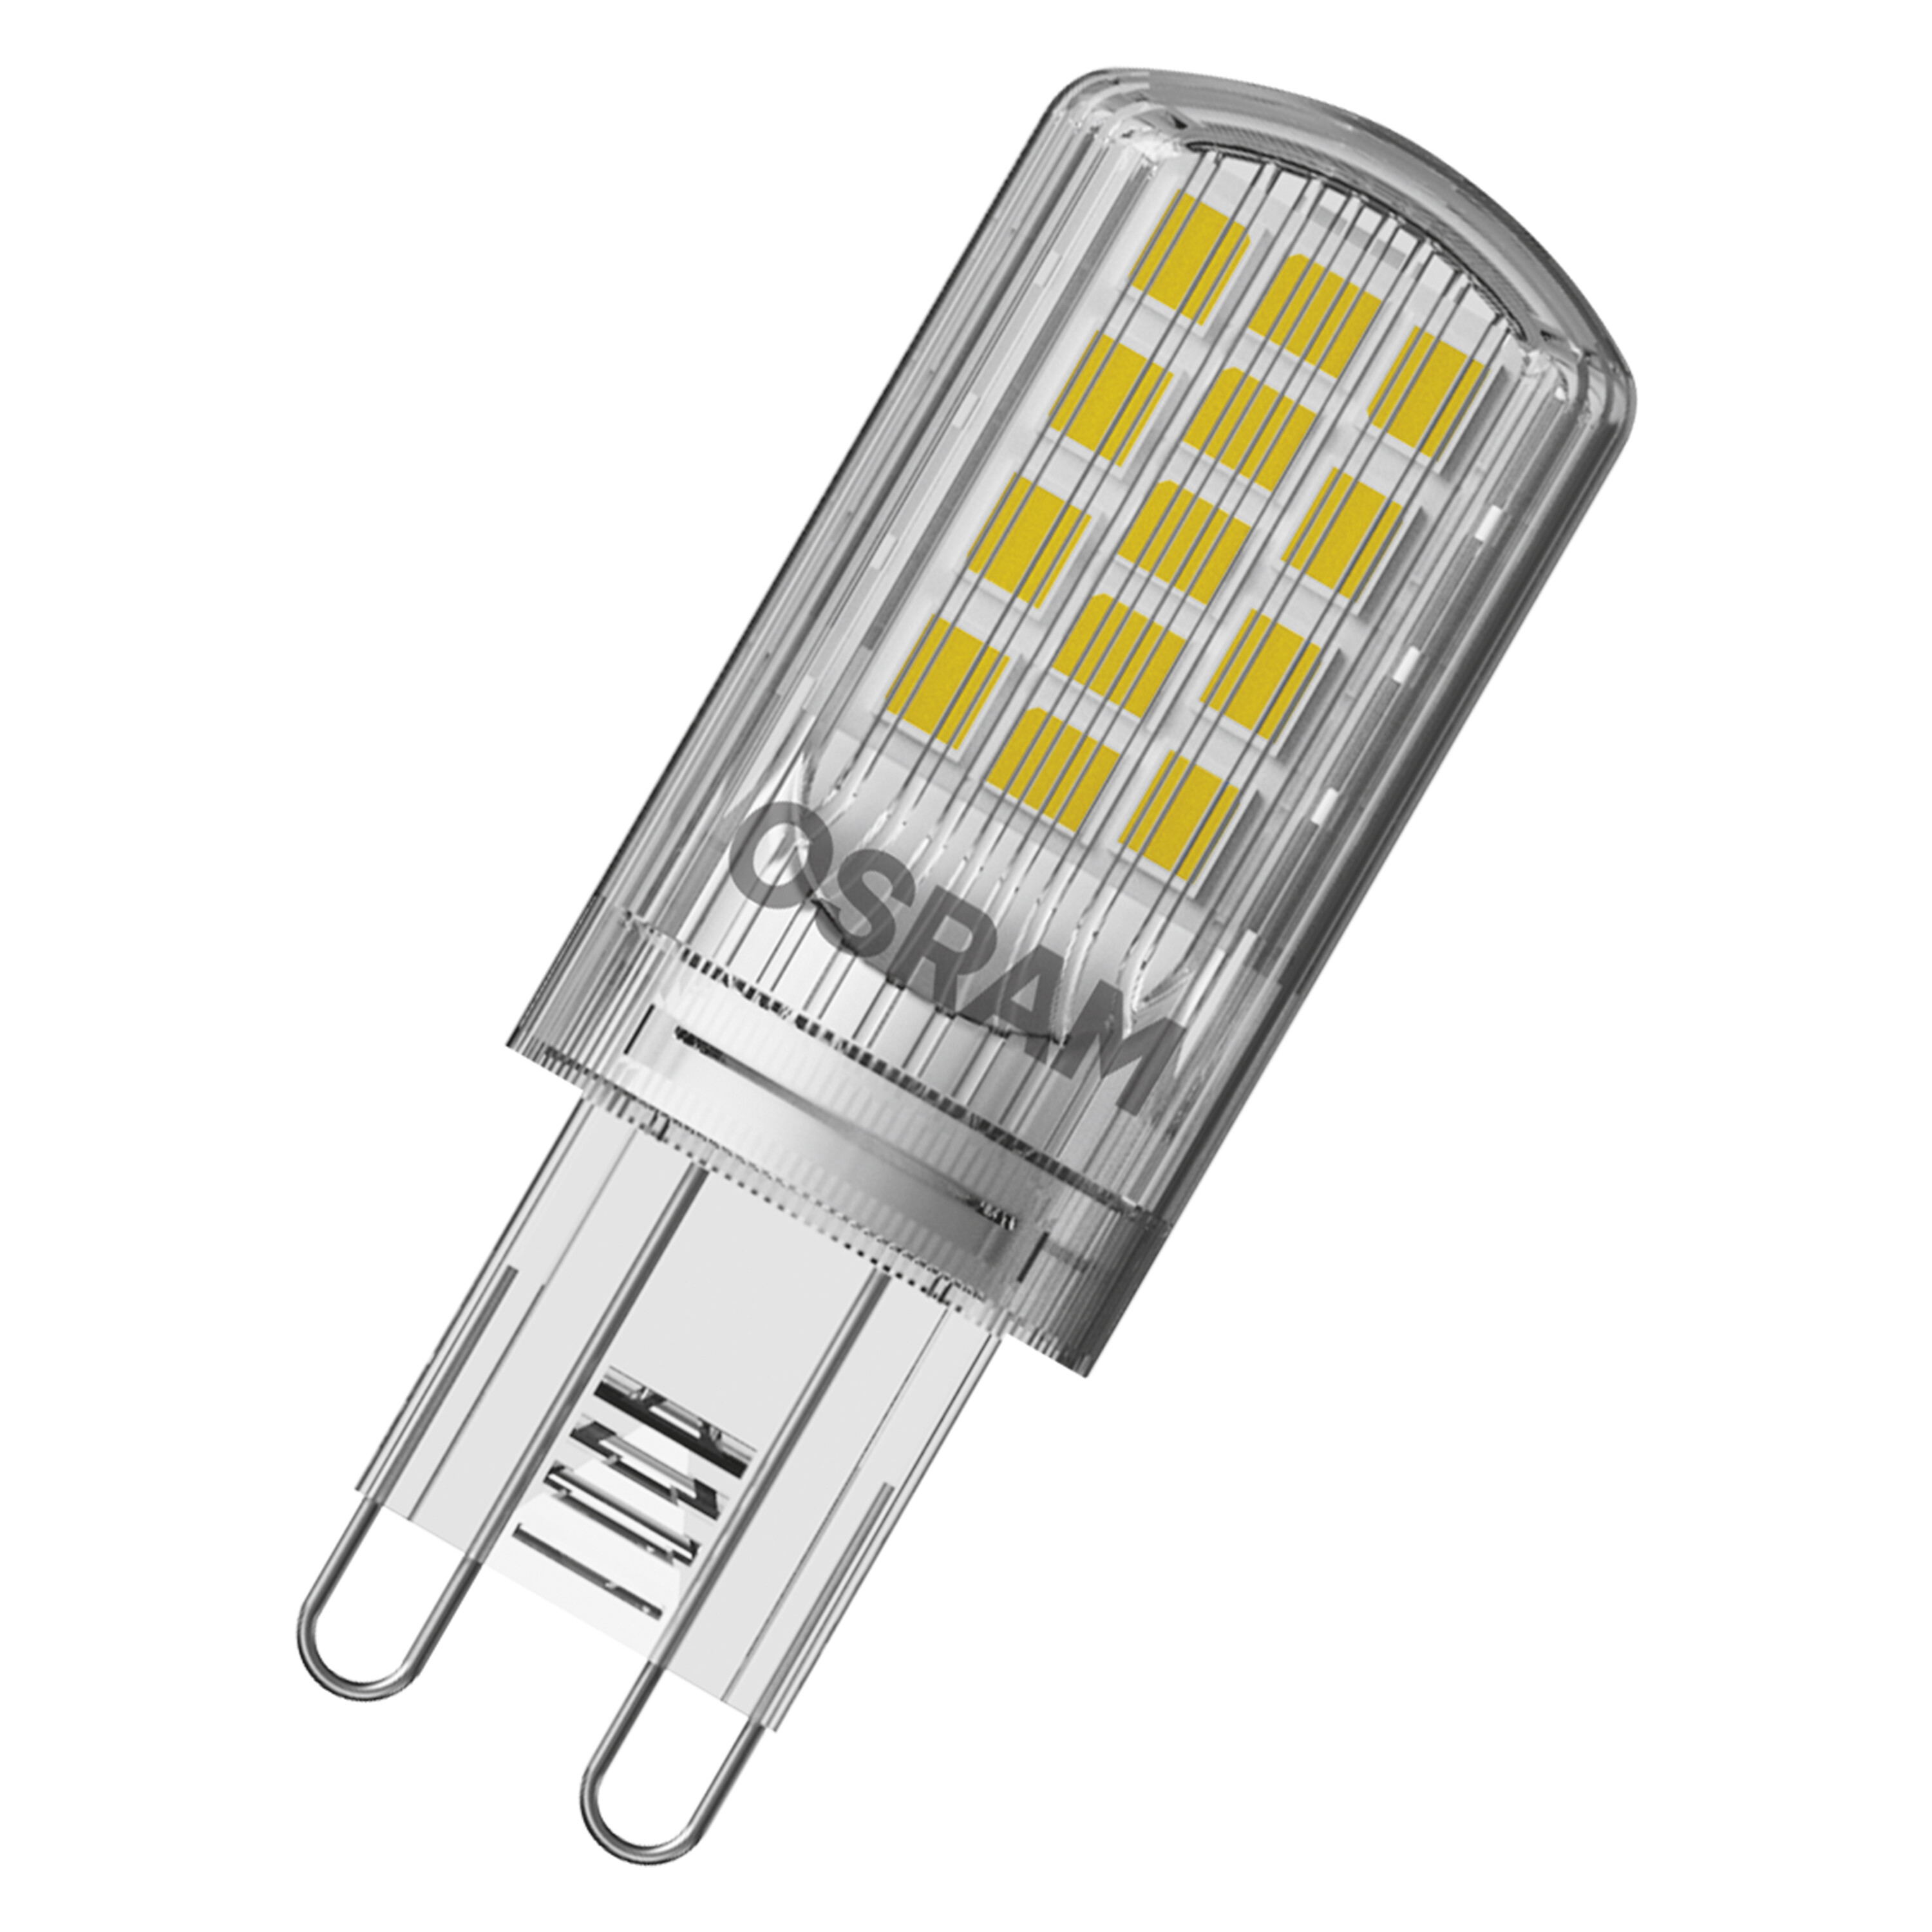 OSRAM  LED PIN G9 LED Warmweiß Lumen 470 Lampe